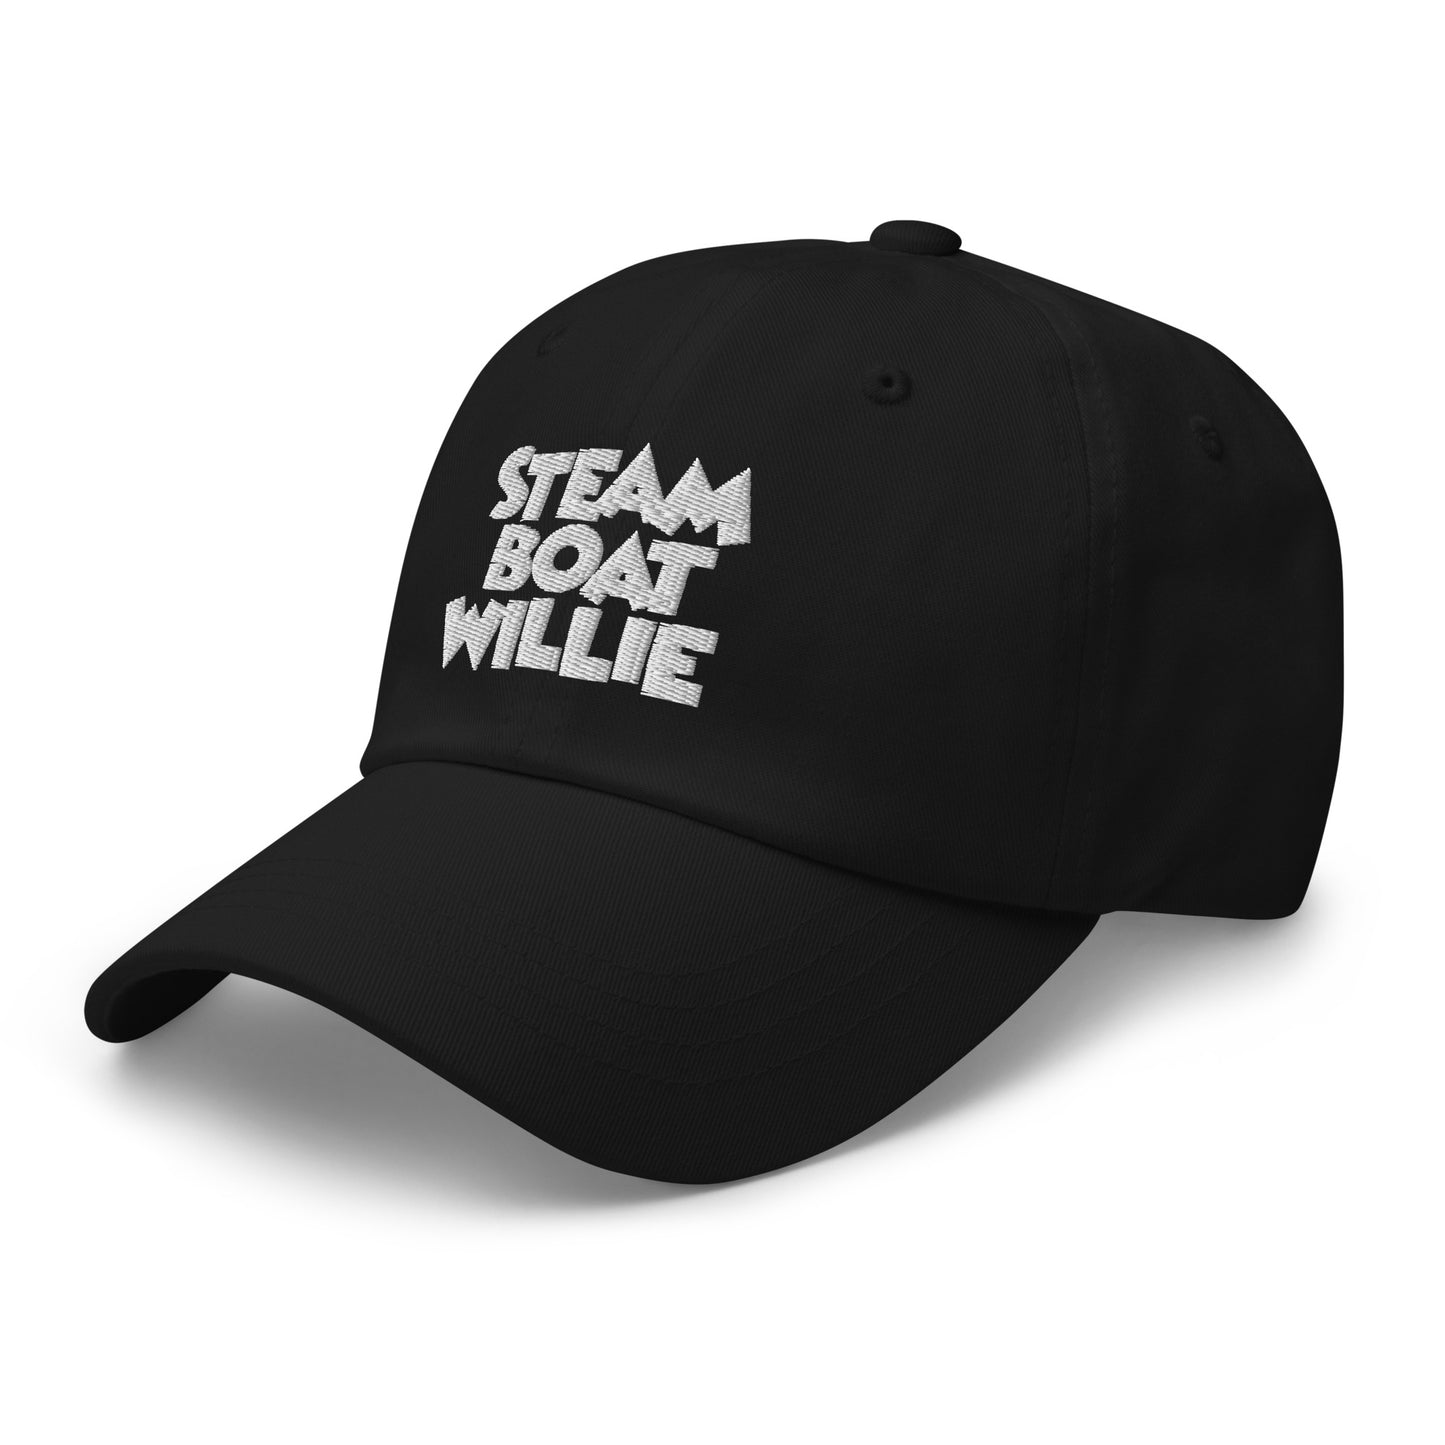 Steamboat Willie Dad Hat - Steamboat Willie World